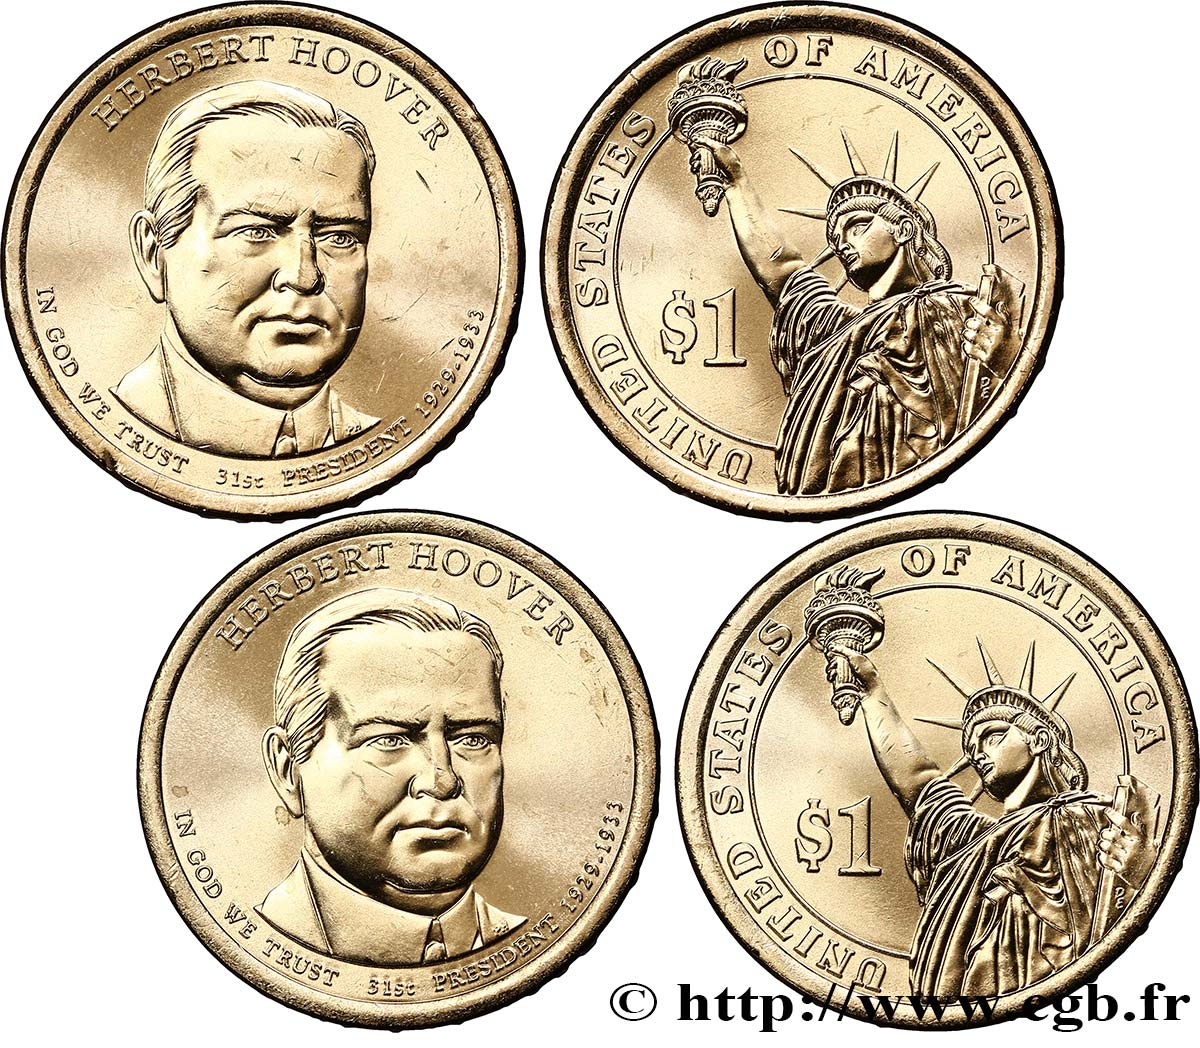 ESTADOS UNIDOS DE AMÉRICA Lot de deux monnaies 1 Dollar Herbert Hoover 2014 Denver FDC 